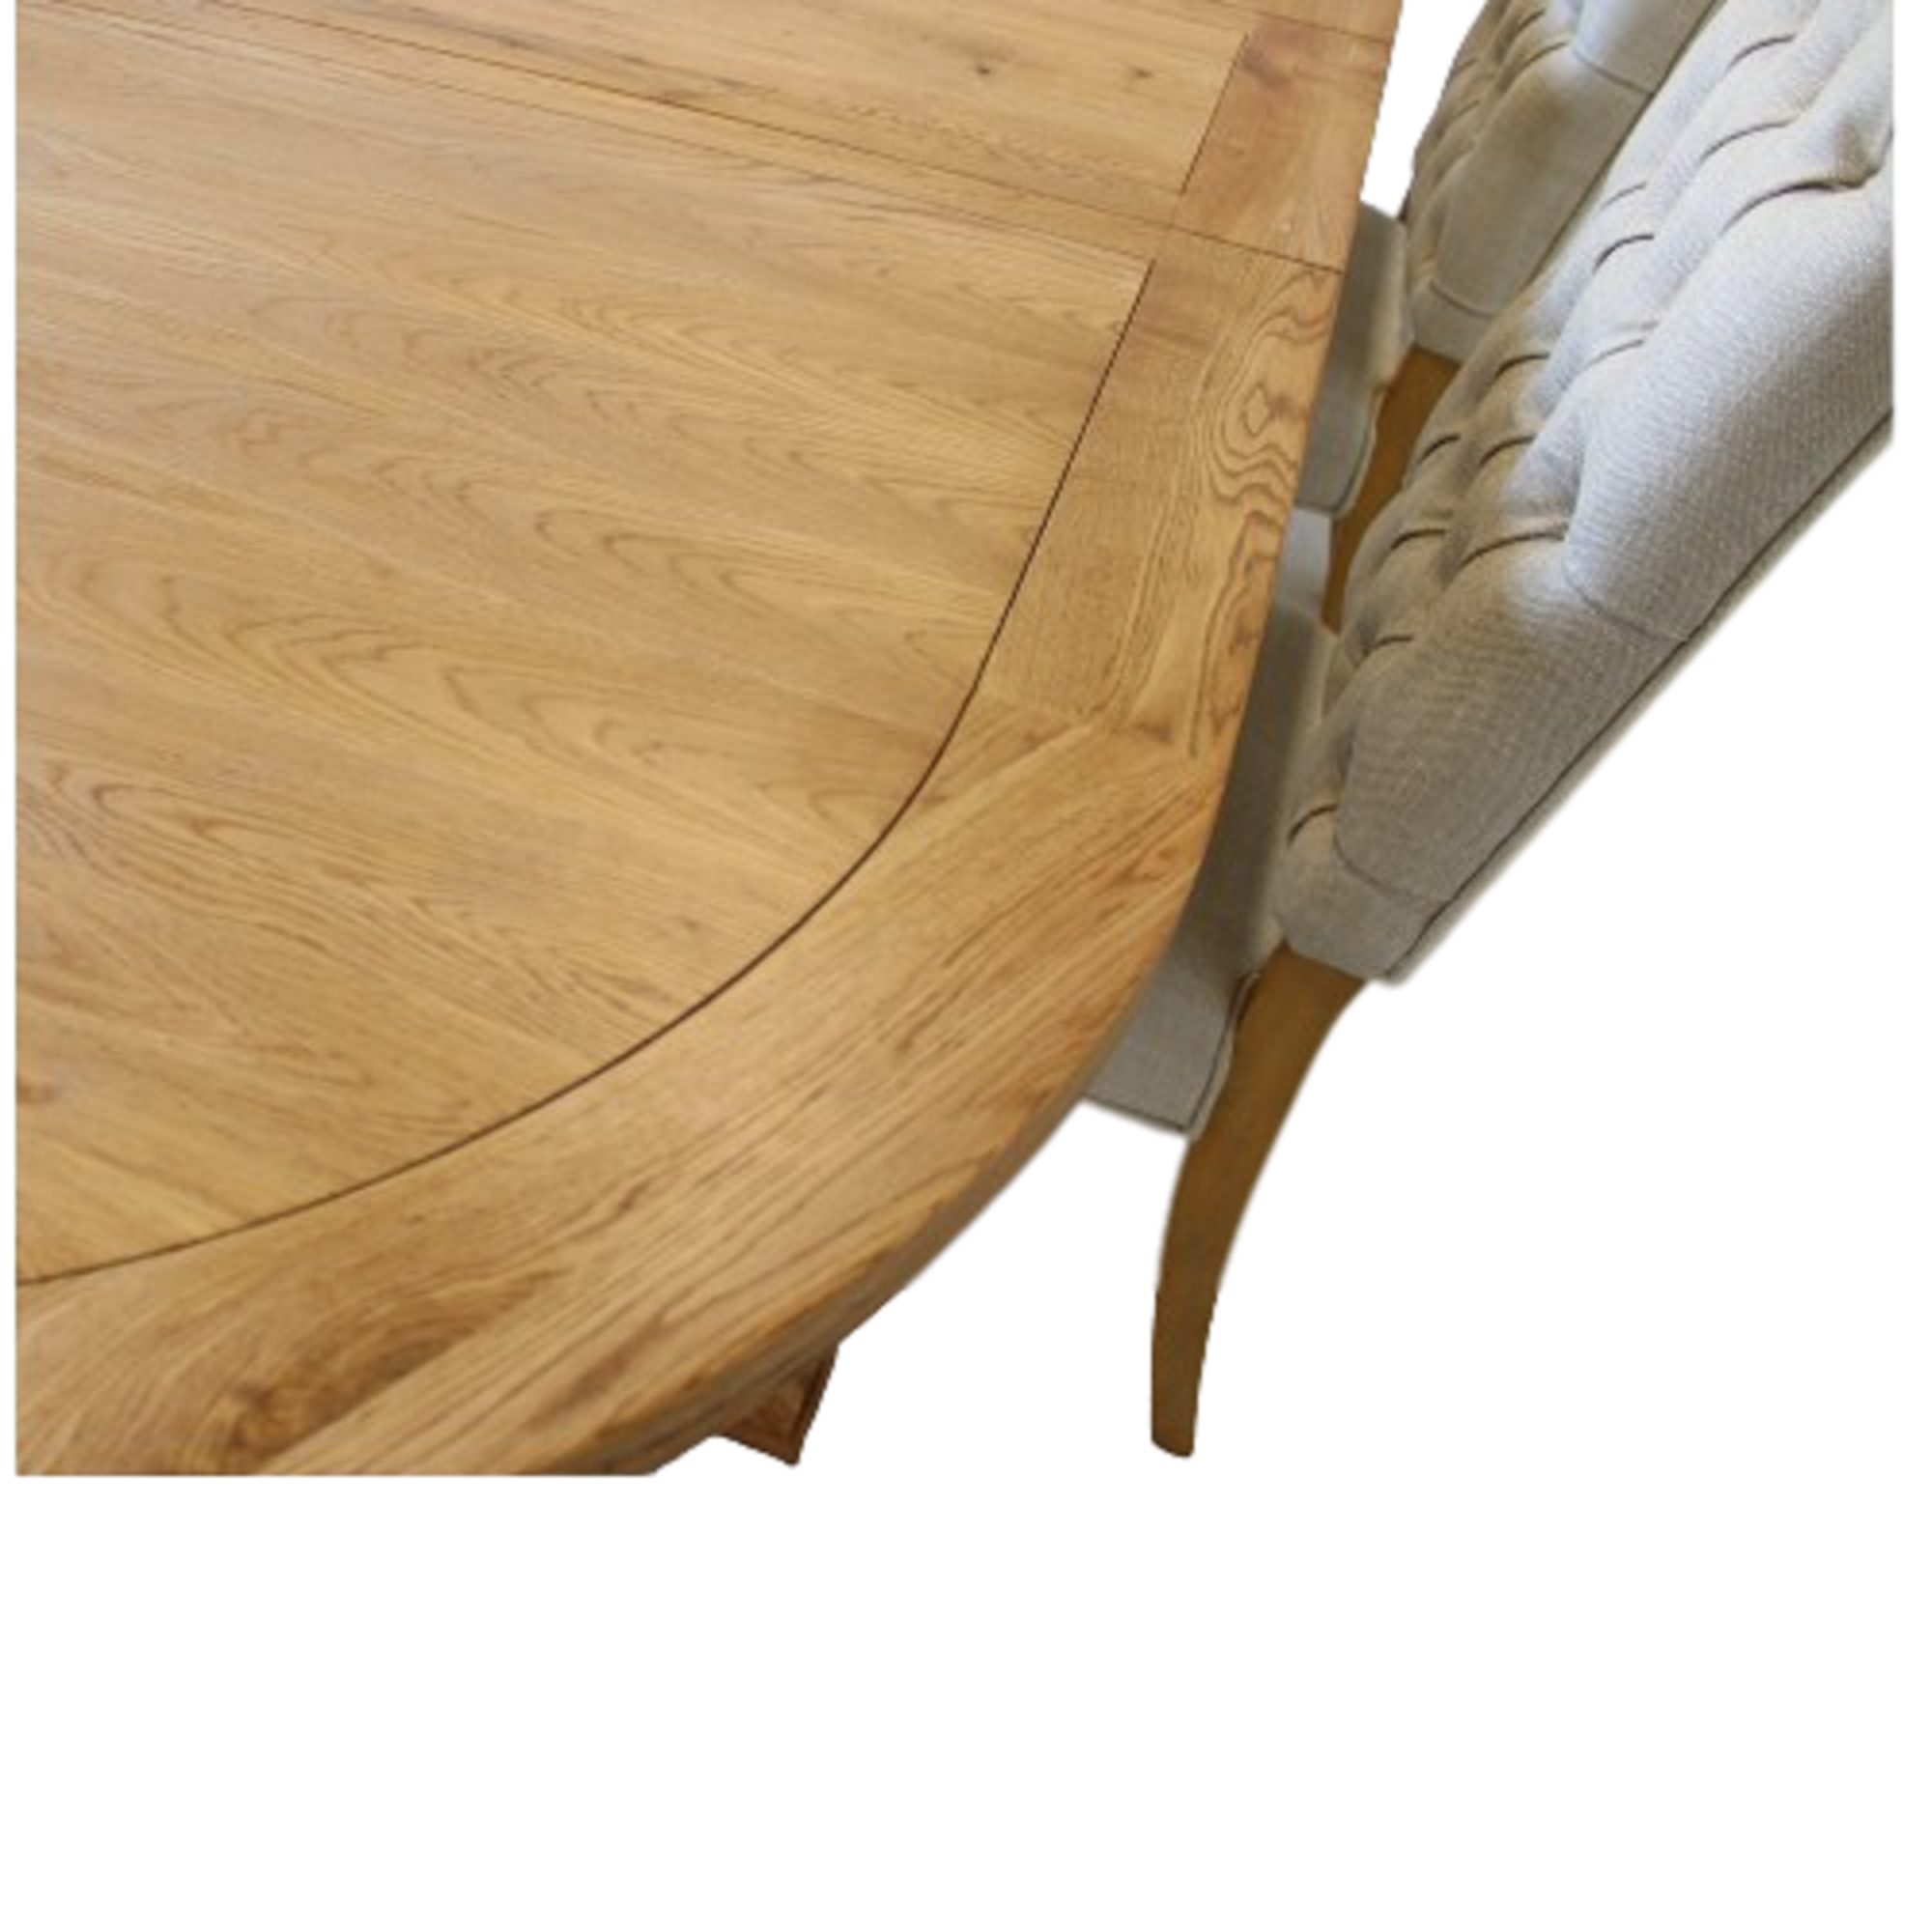 Chamonix Oval Extending Table